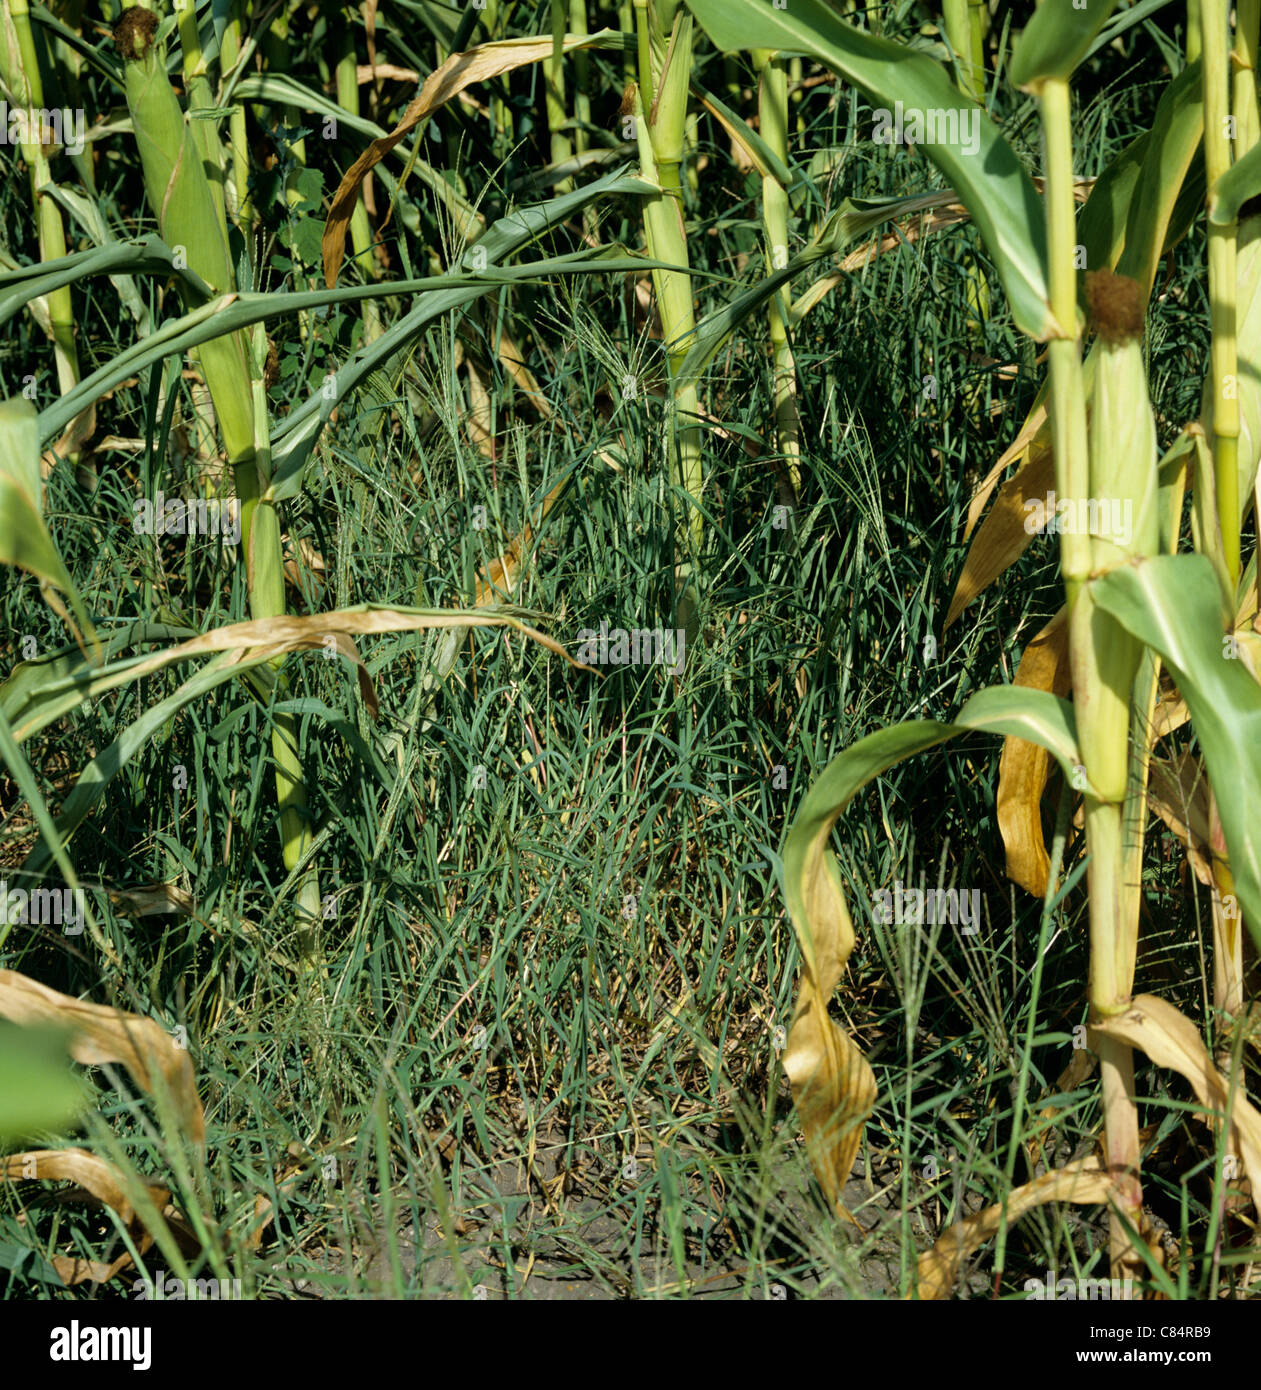 Large crabgrass (Digitaria sanguinalis) flowering grass weeds in a mature maize crop, France Stock Photo